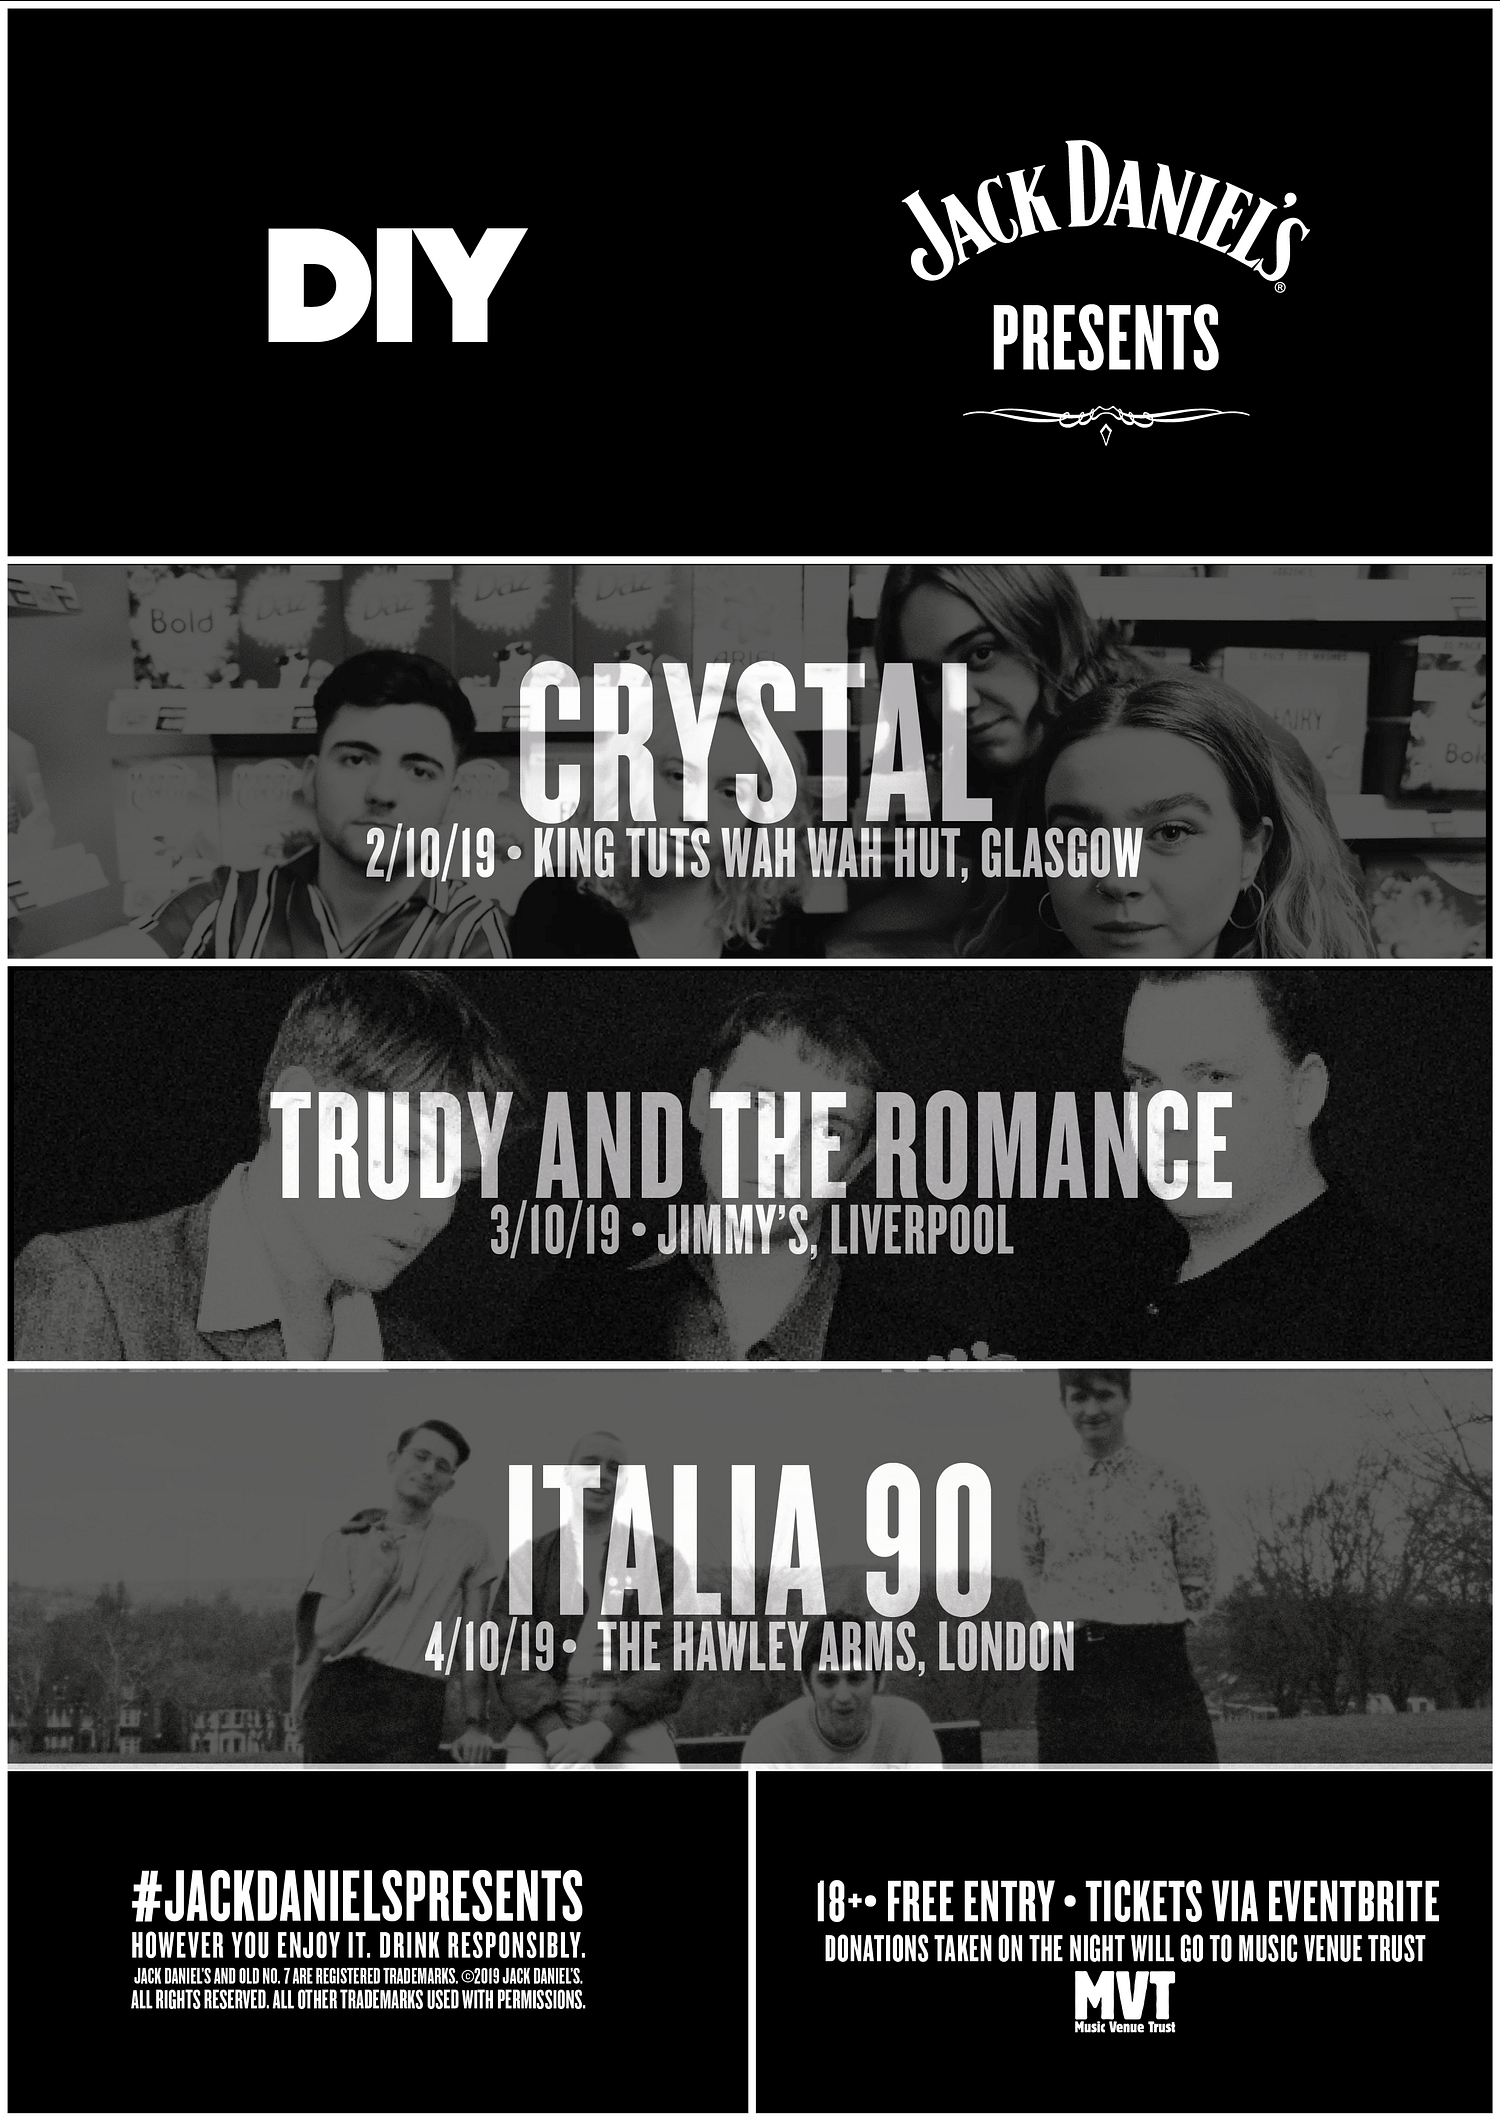 Italia 90, Trudy and the Romance & CRYSTAL for DIY & Jack Daniel's Presents UK mini-tour